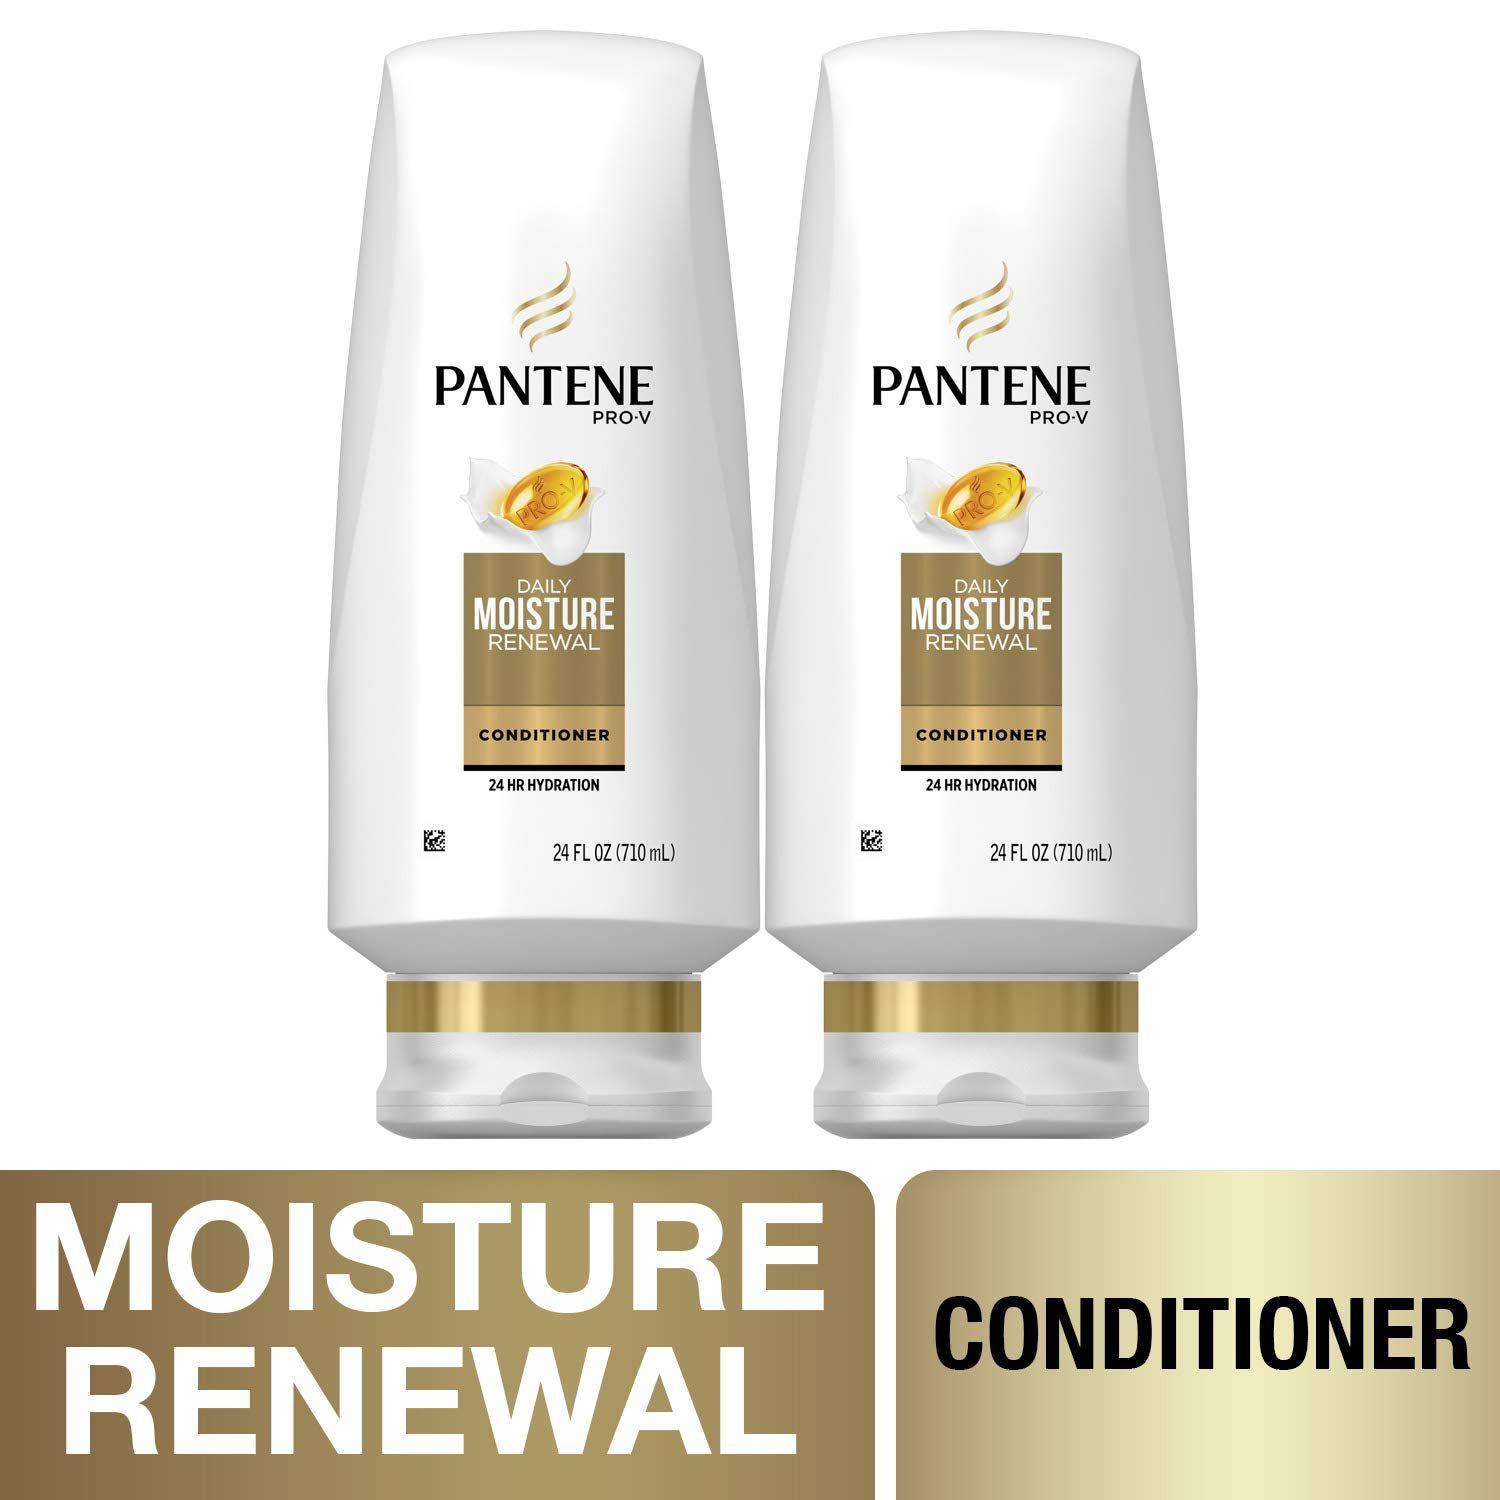 Pantene Logo - Pantene, Conditioner, Pro V Daily Moisture Renewal